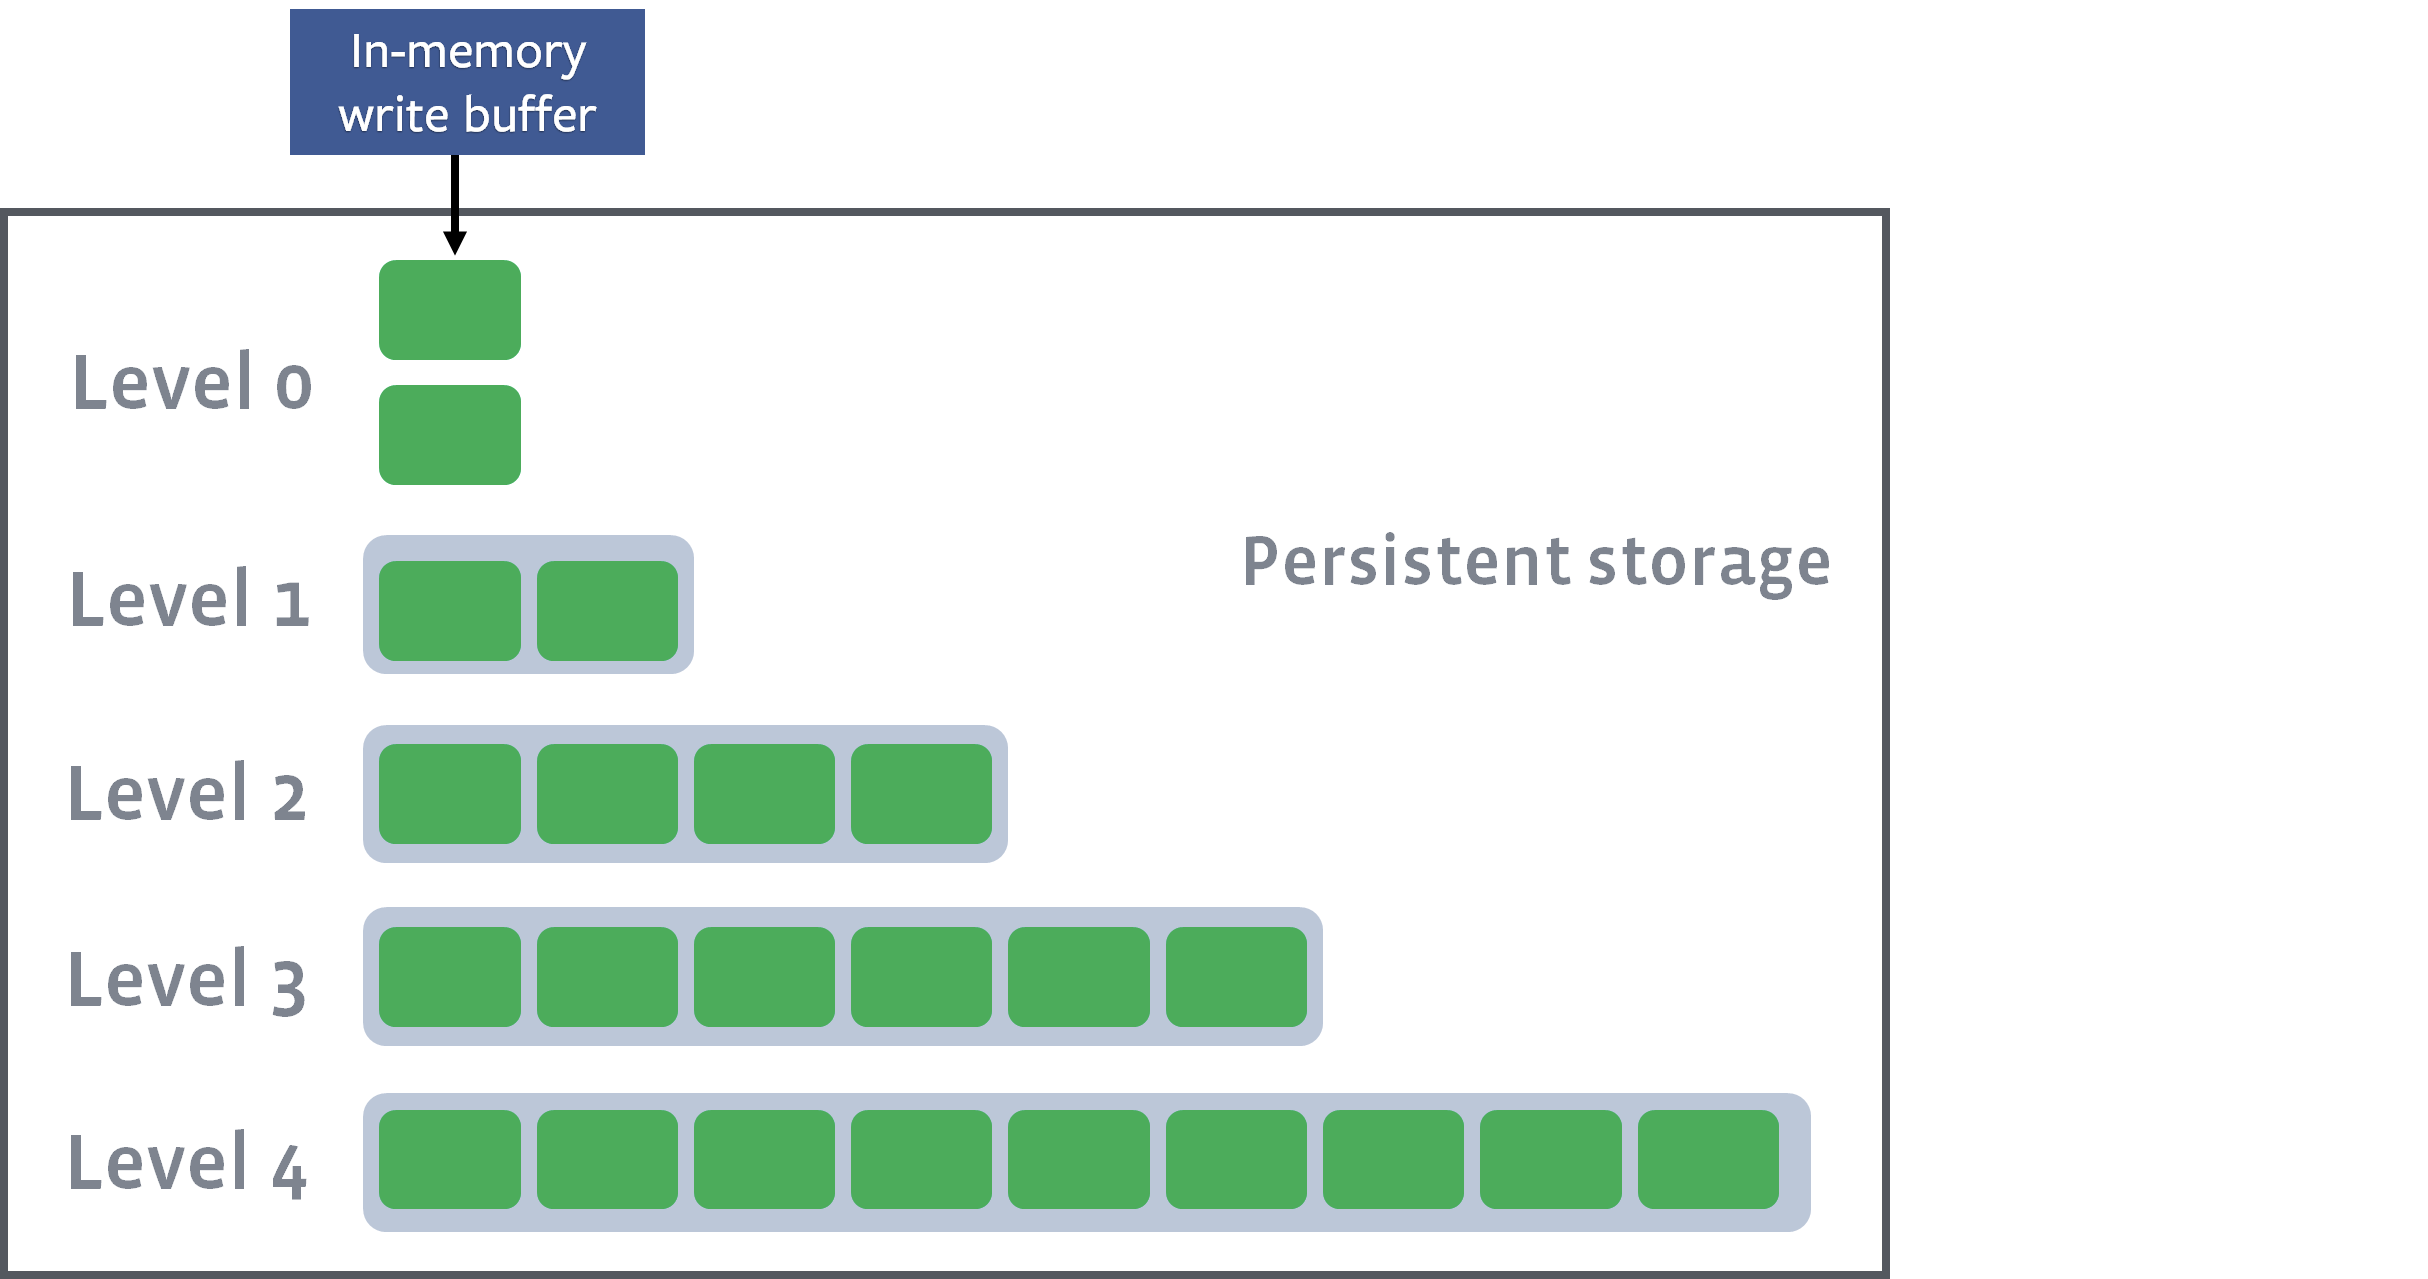 Persistent storage